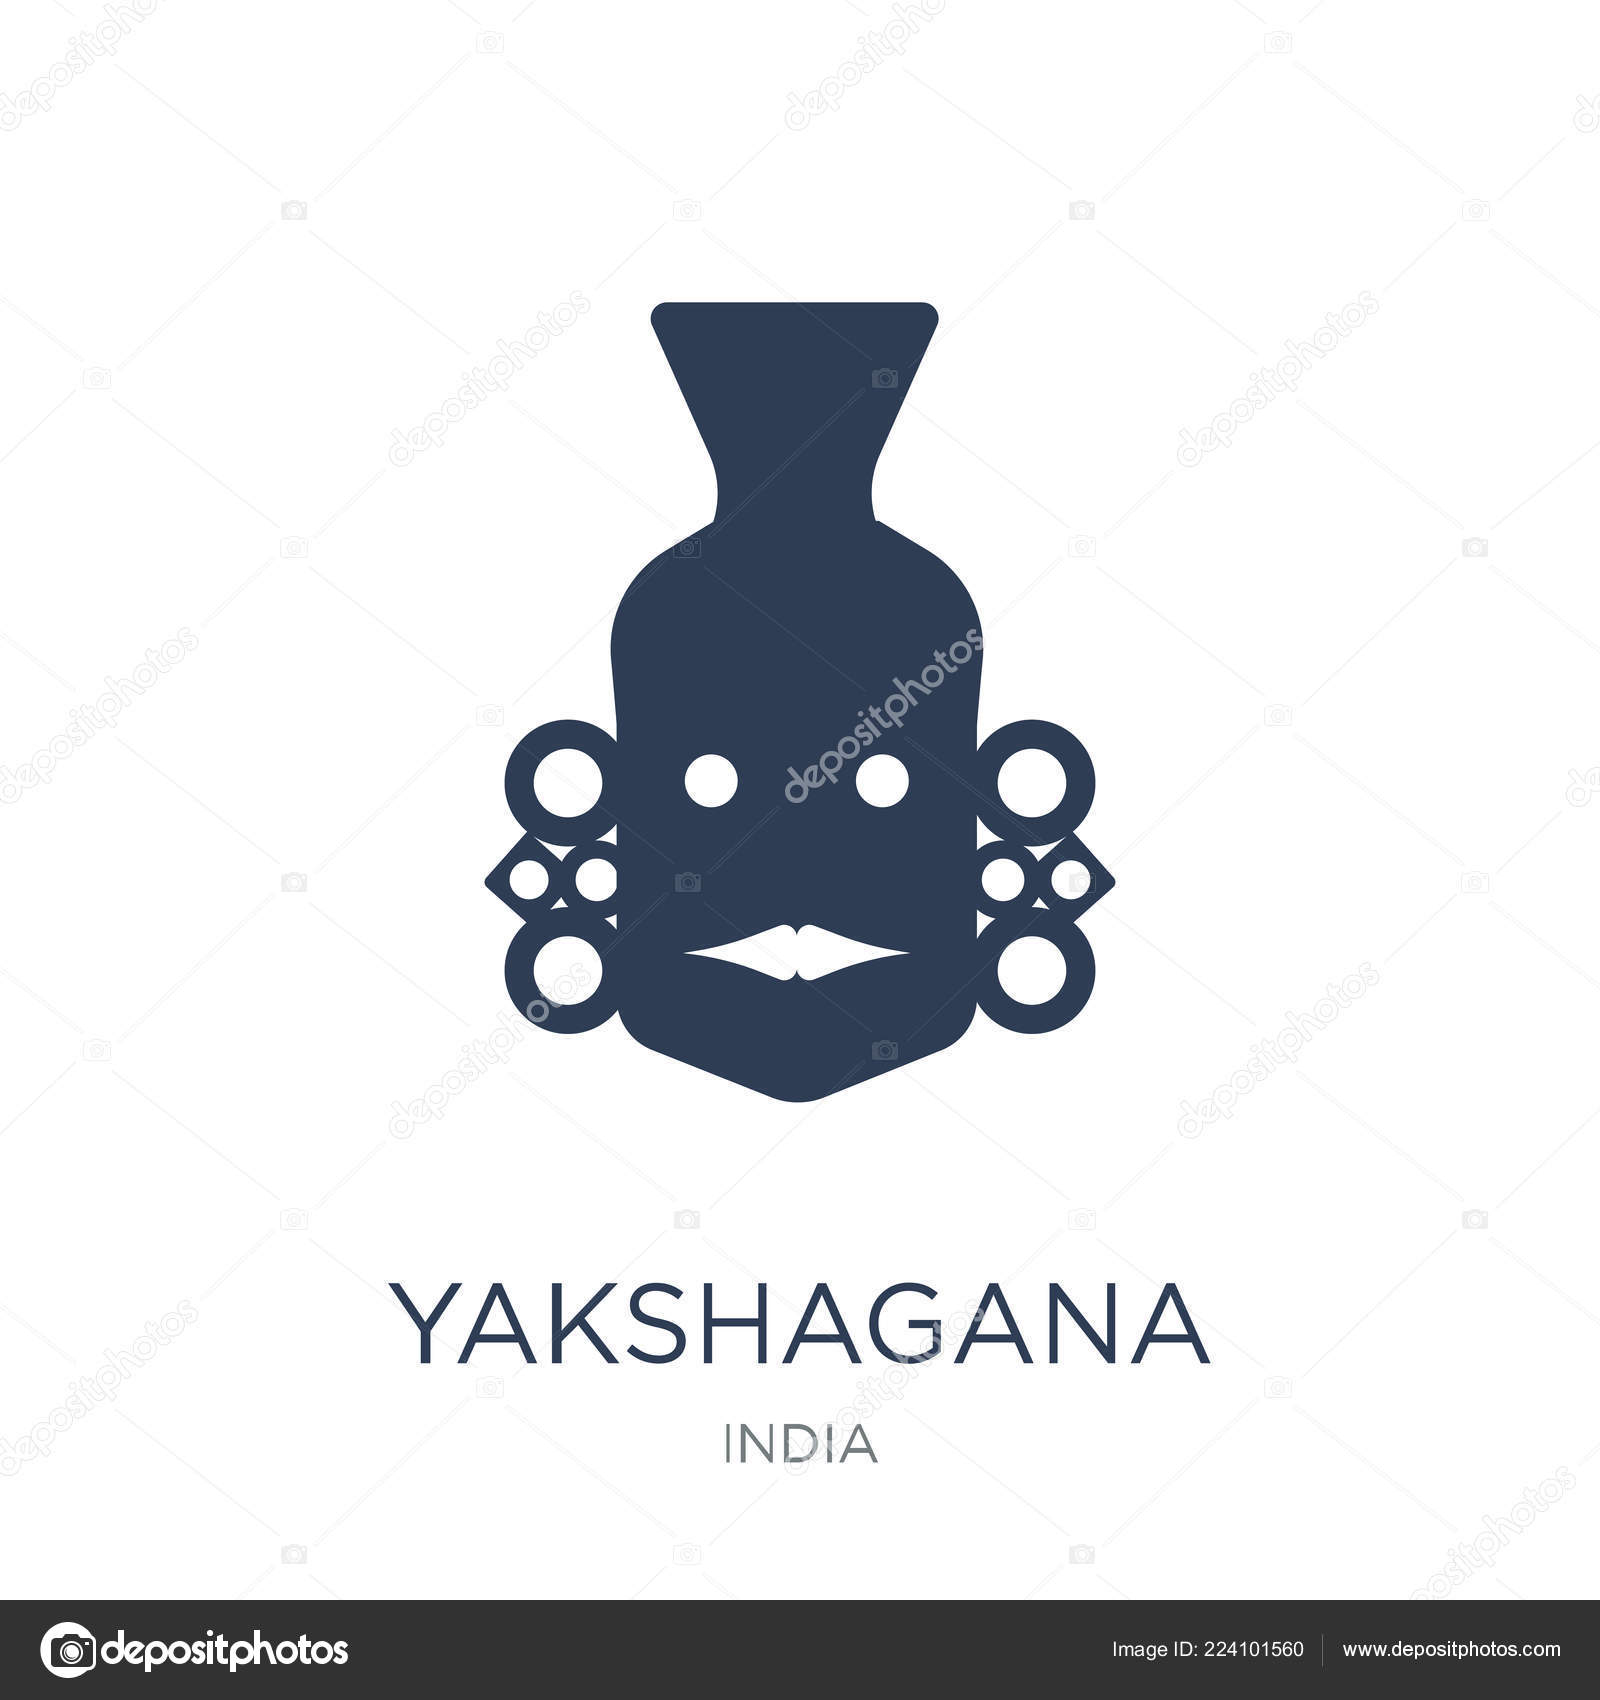 Yakshagana Vector Art Stock Images | Depositphotos